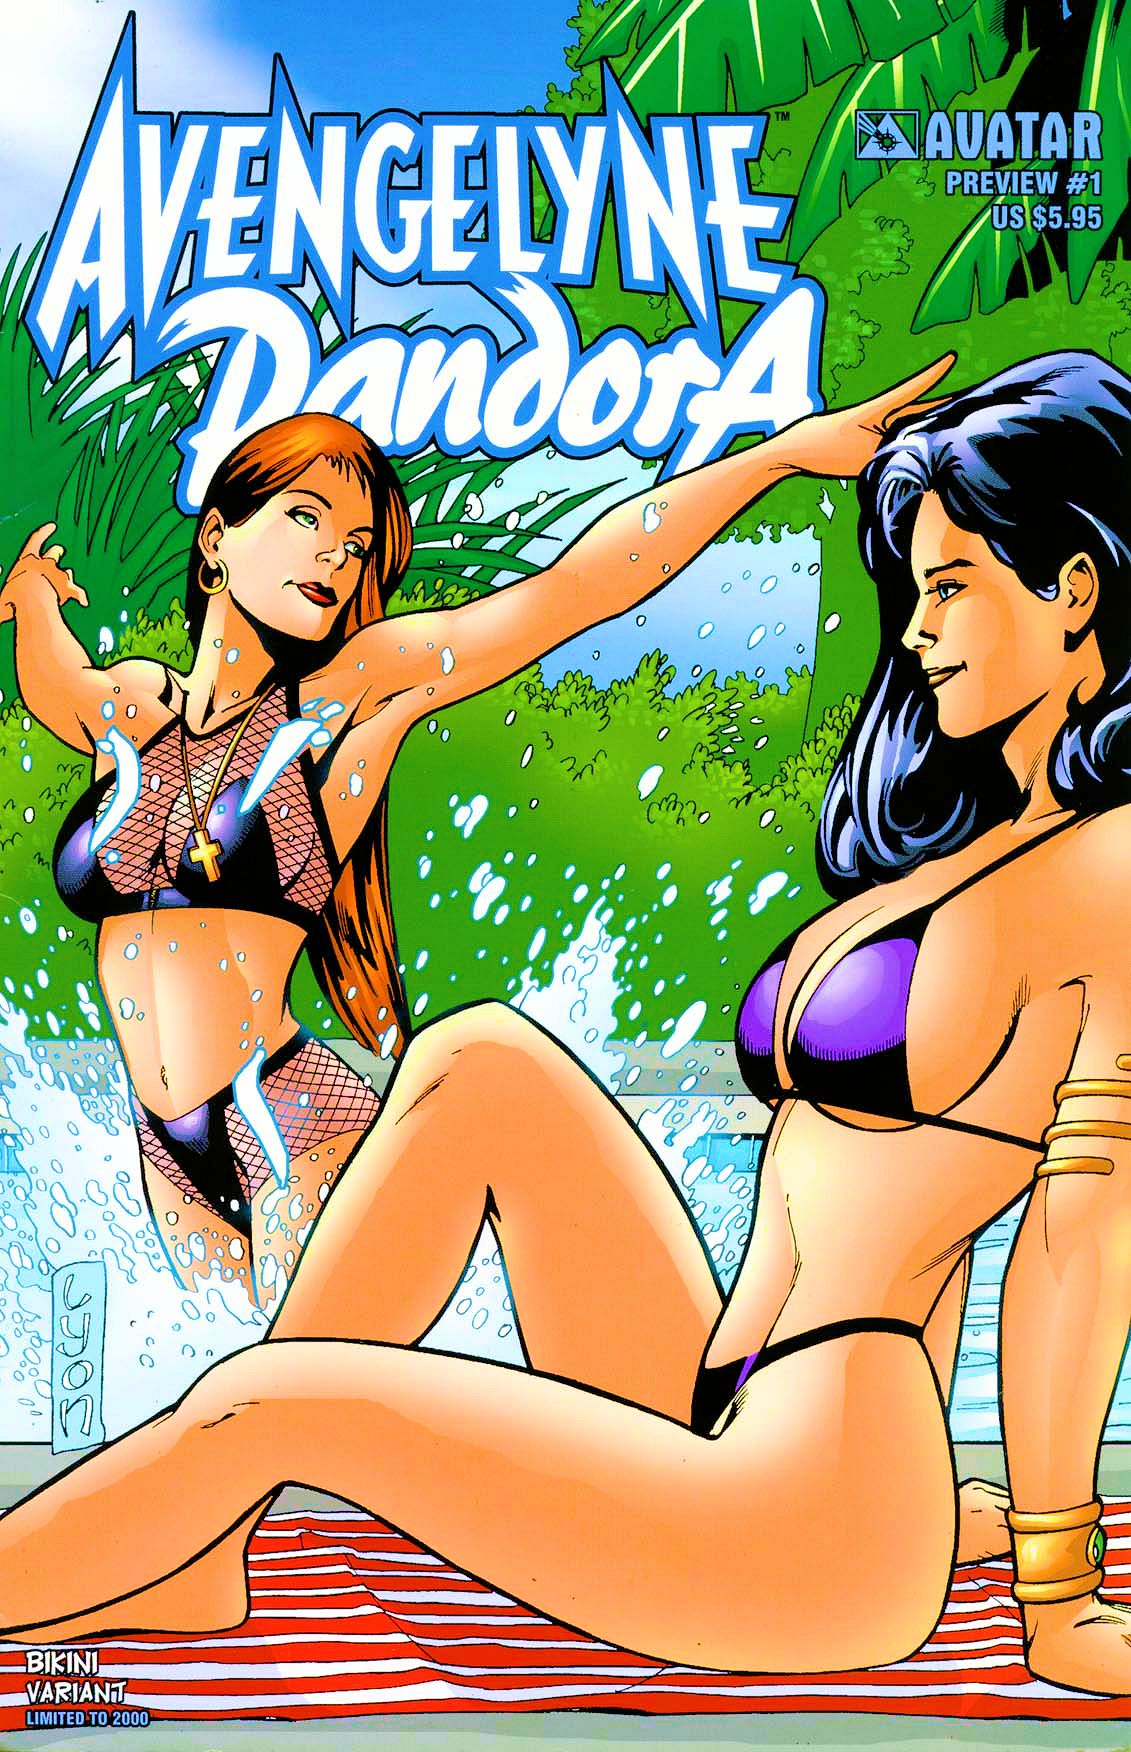 Read online Avengelyne / Pandora comic -  Issue #0 - 1